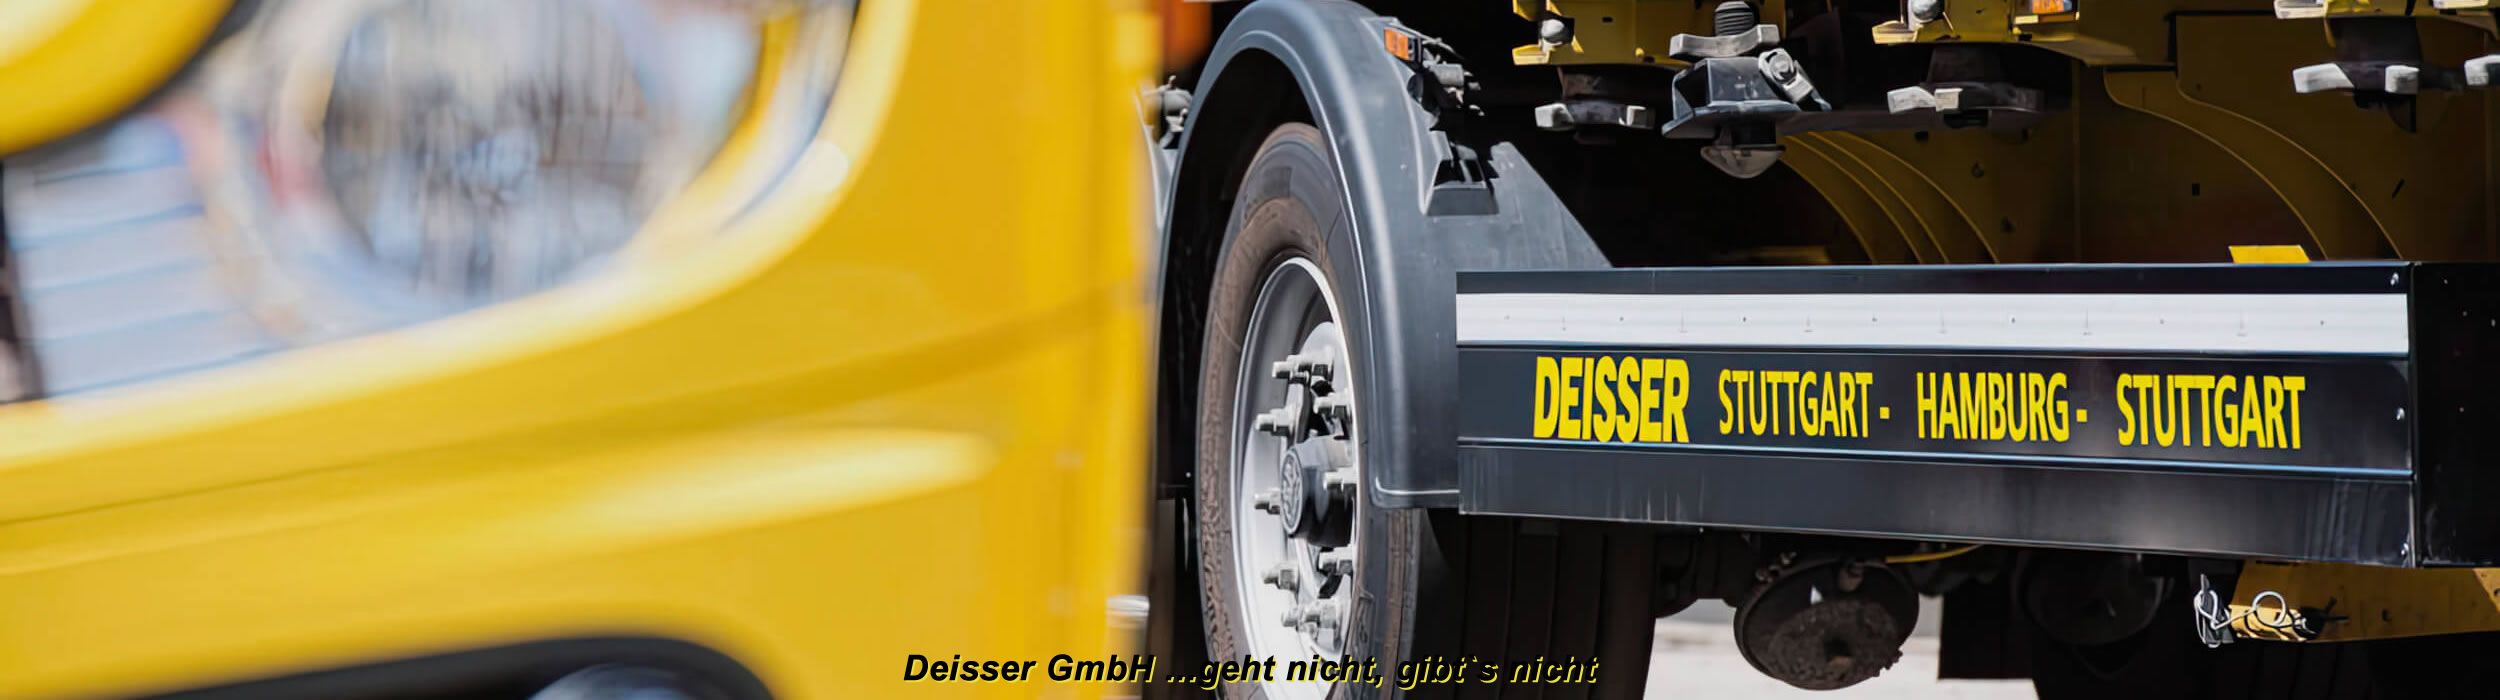 Deisser GmbH / Transportlogistik Seecontainer / Eigene Waage